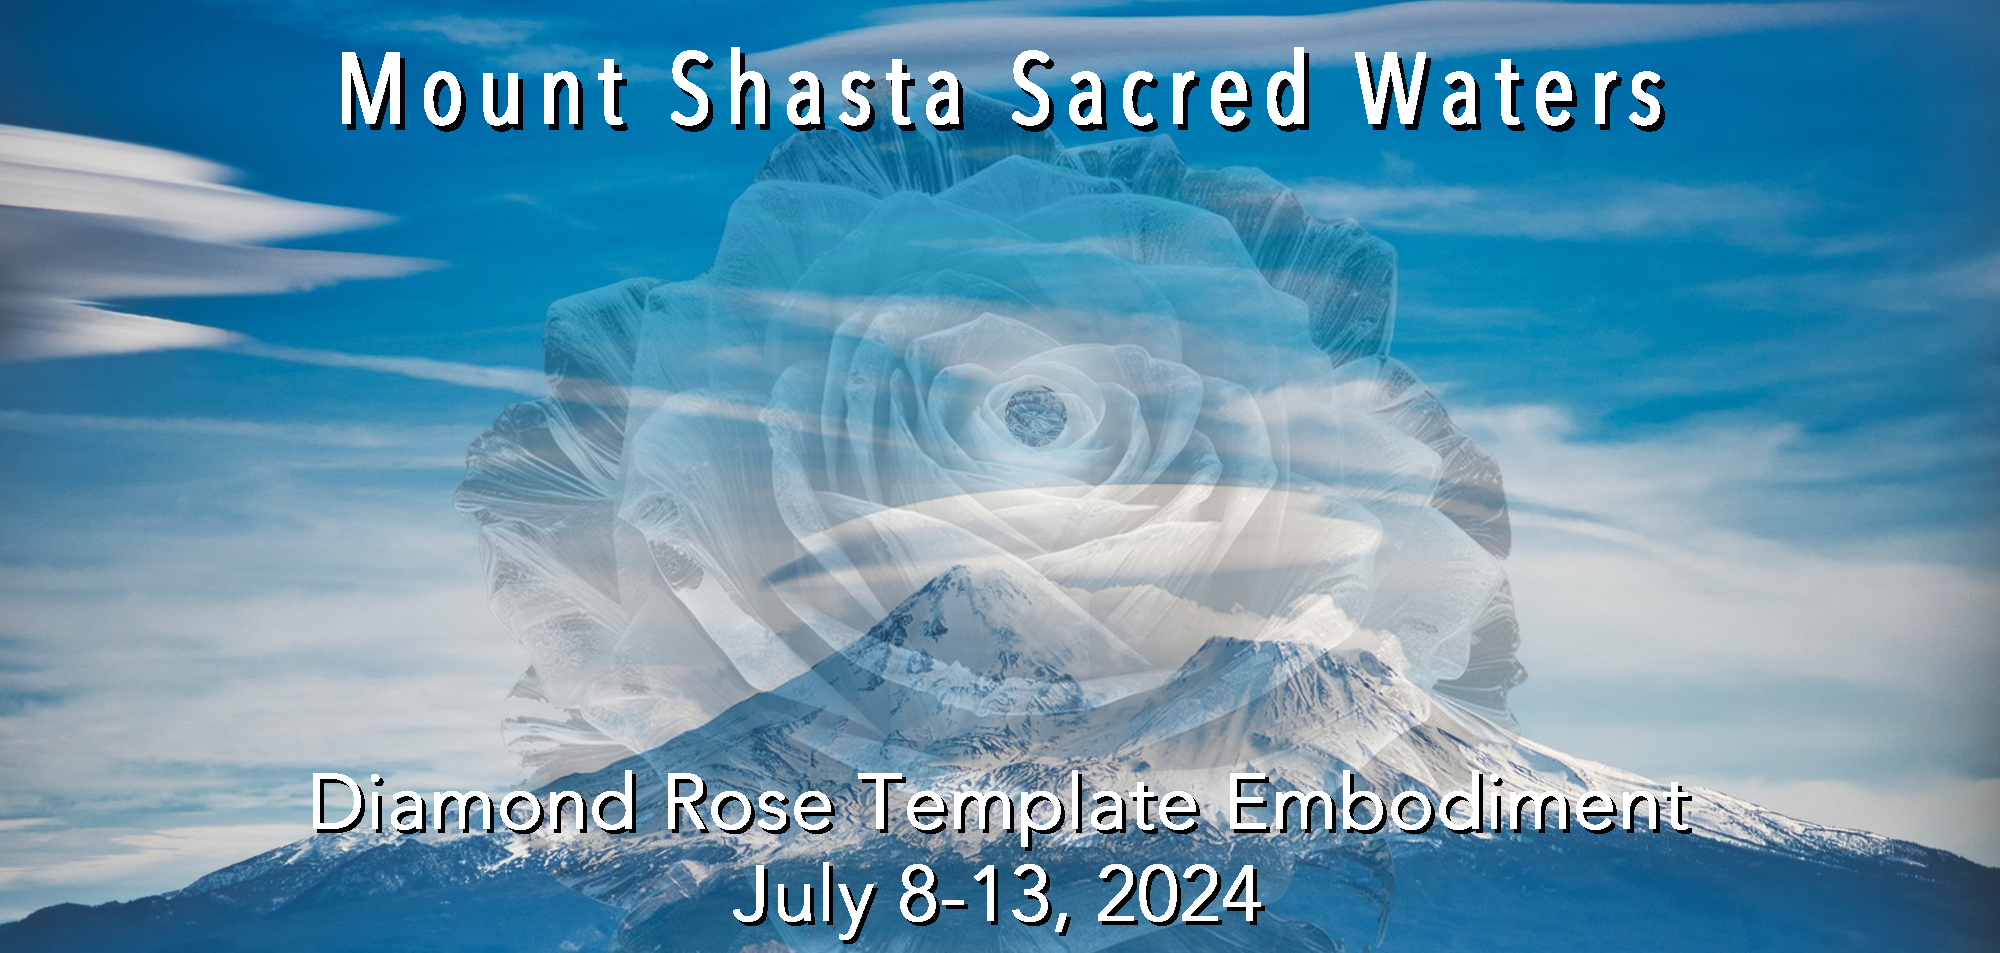 Mount Shasta Sacred Waters Diamond Rose Template Embodiment